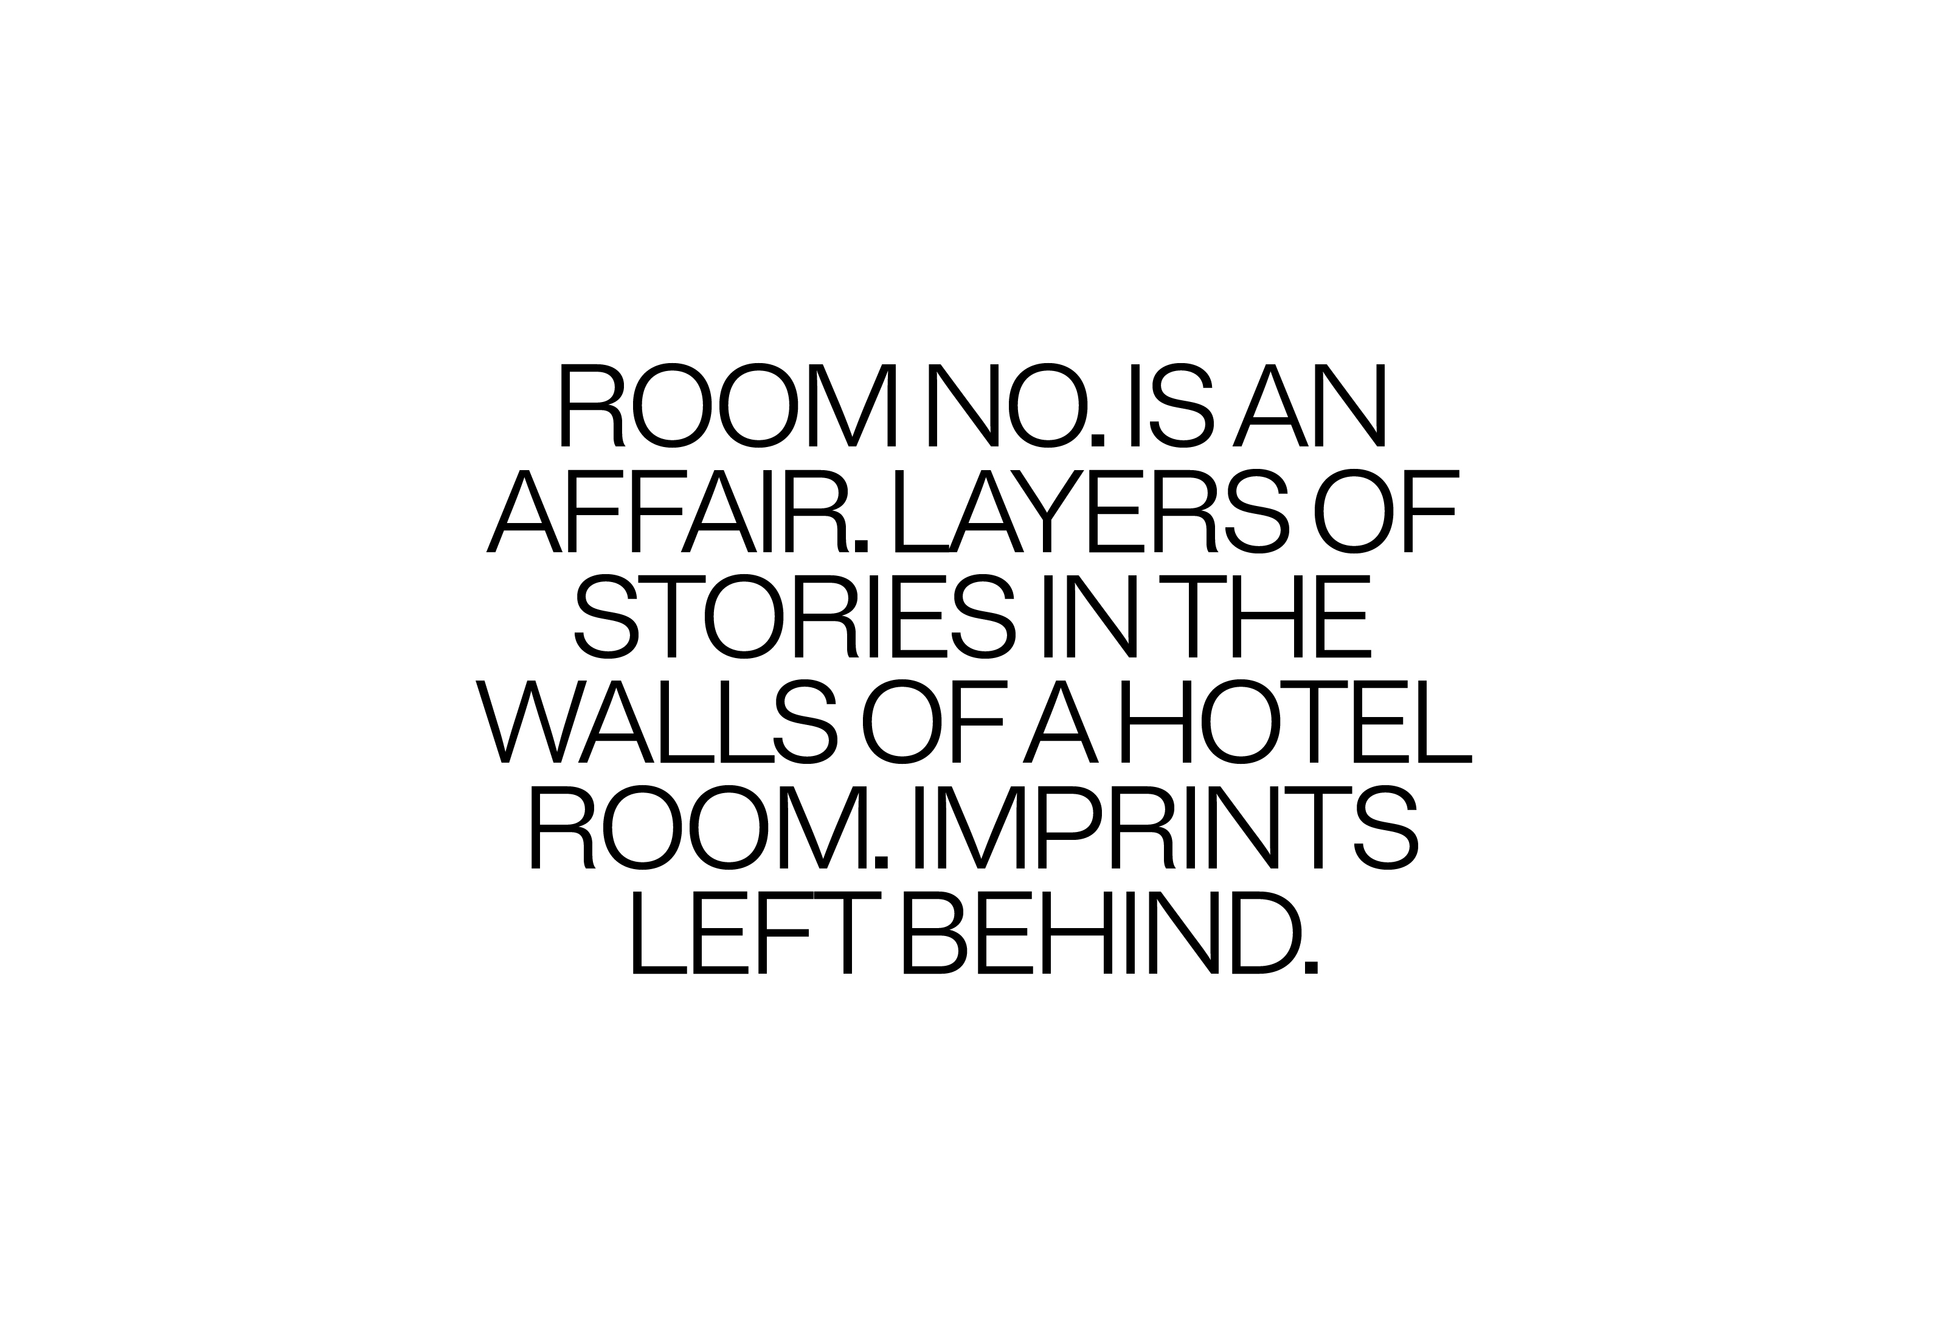 Room No. is an affair. 